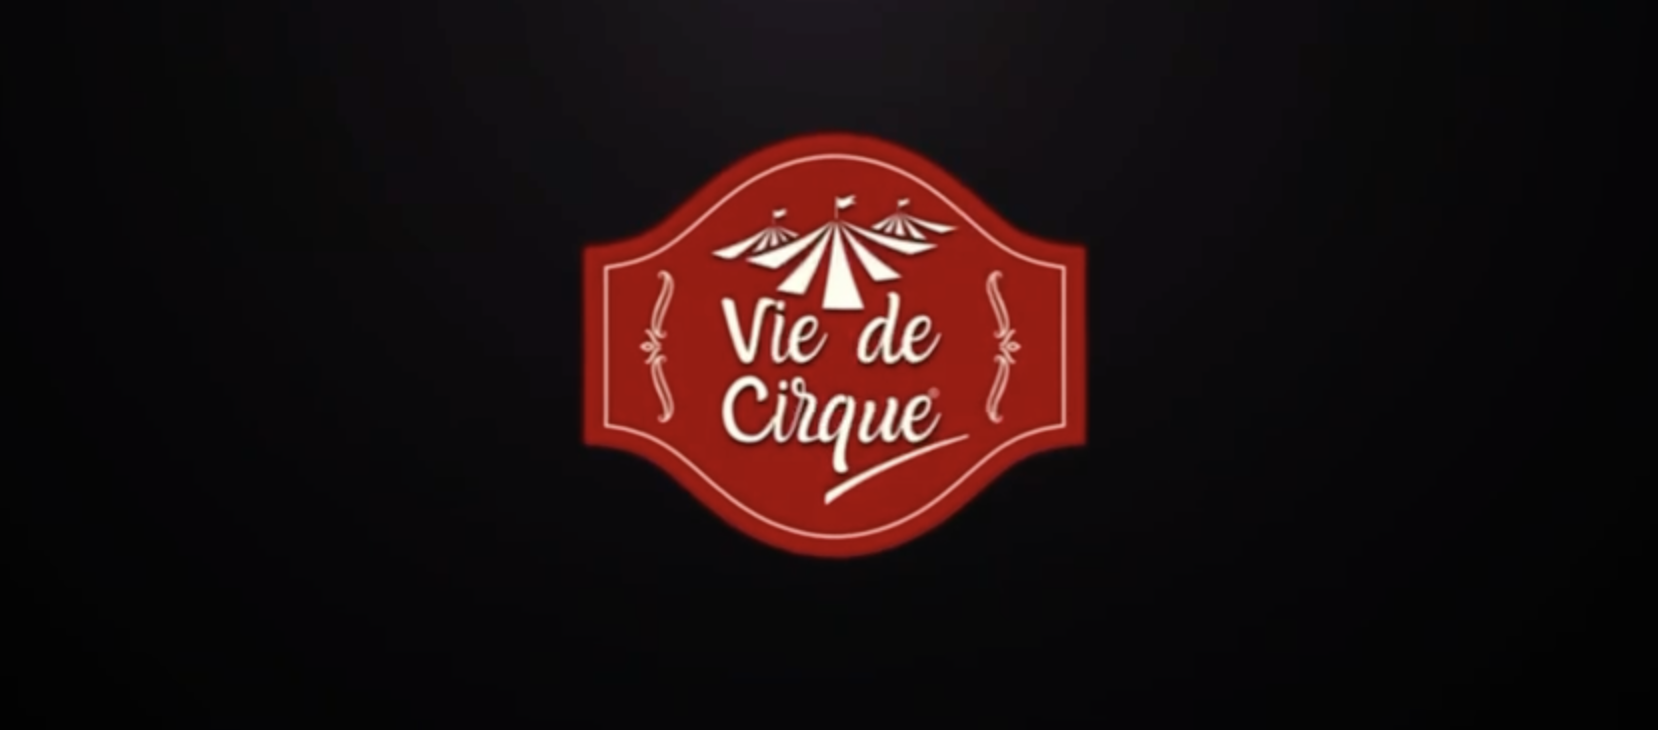 Vie de Cirque, te espera a partir del próximo 6 de abril en Metepec, Edomex